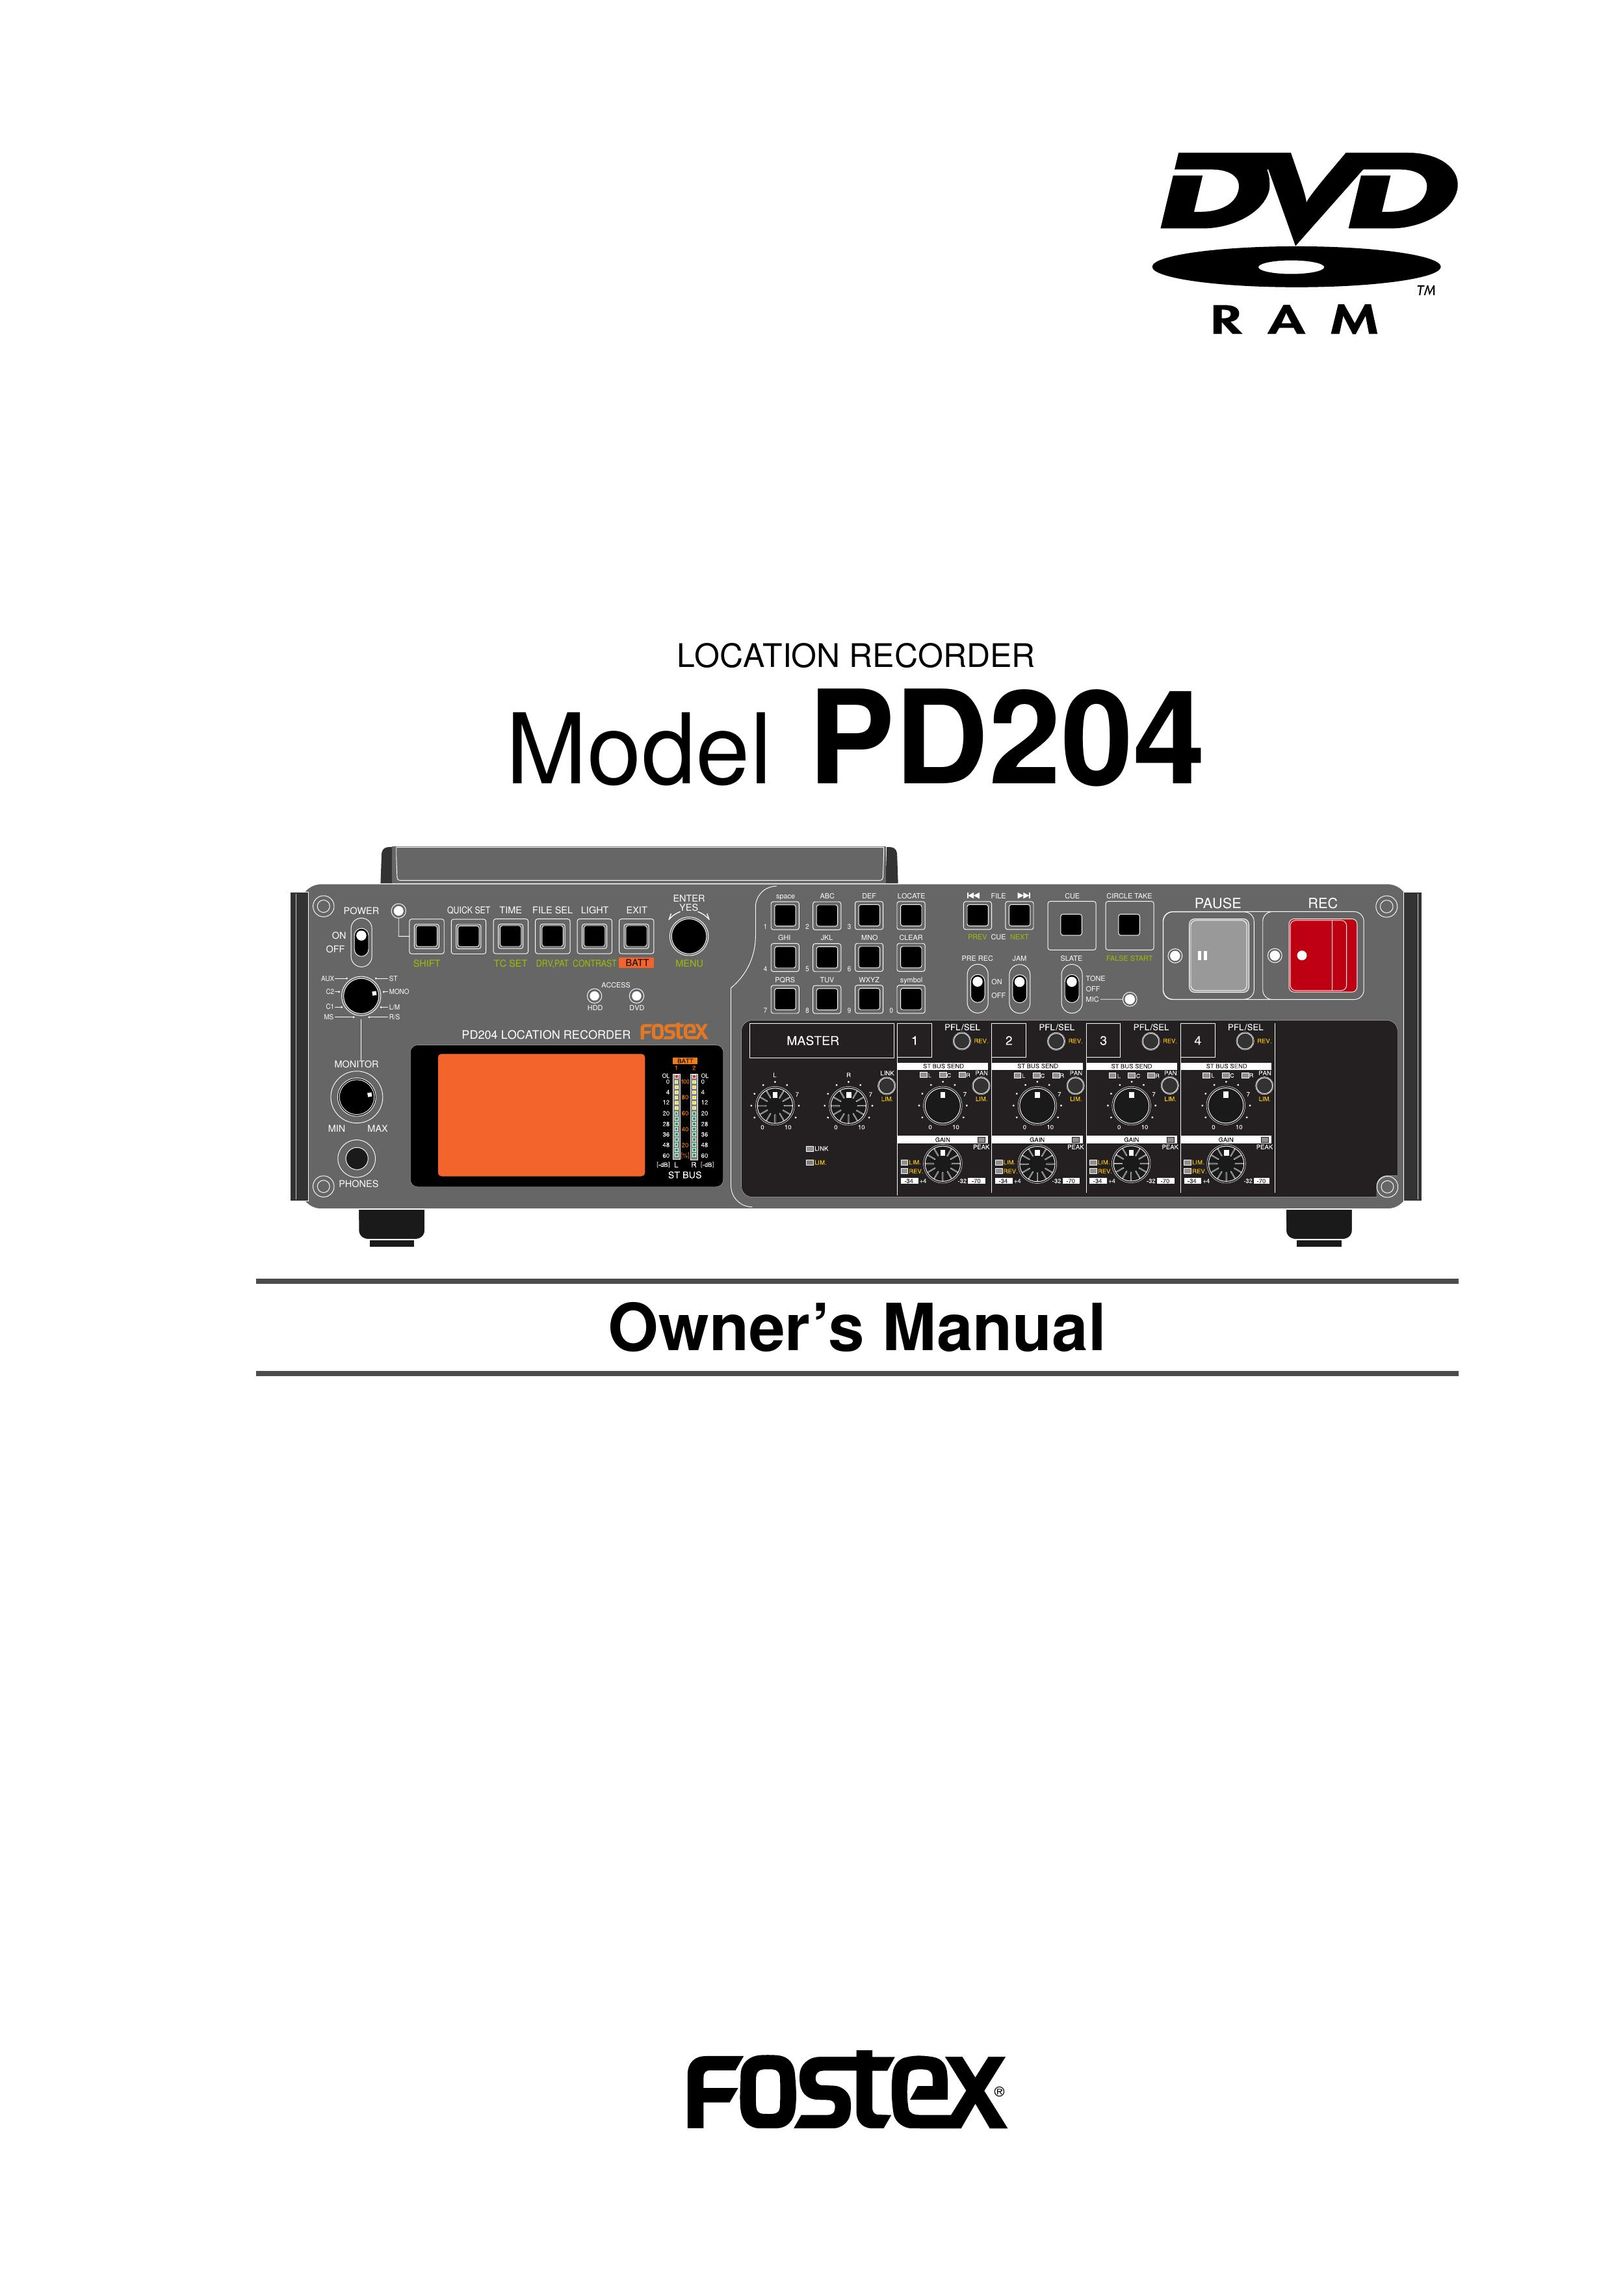 Fostex PD204 DVD Recorder User Manual